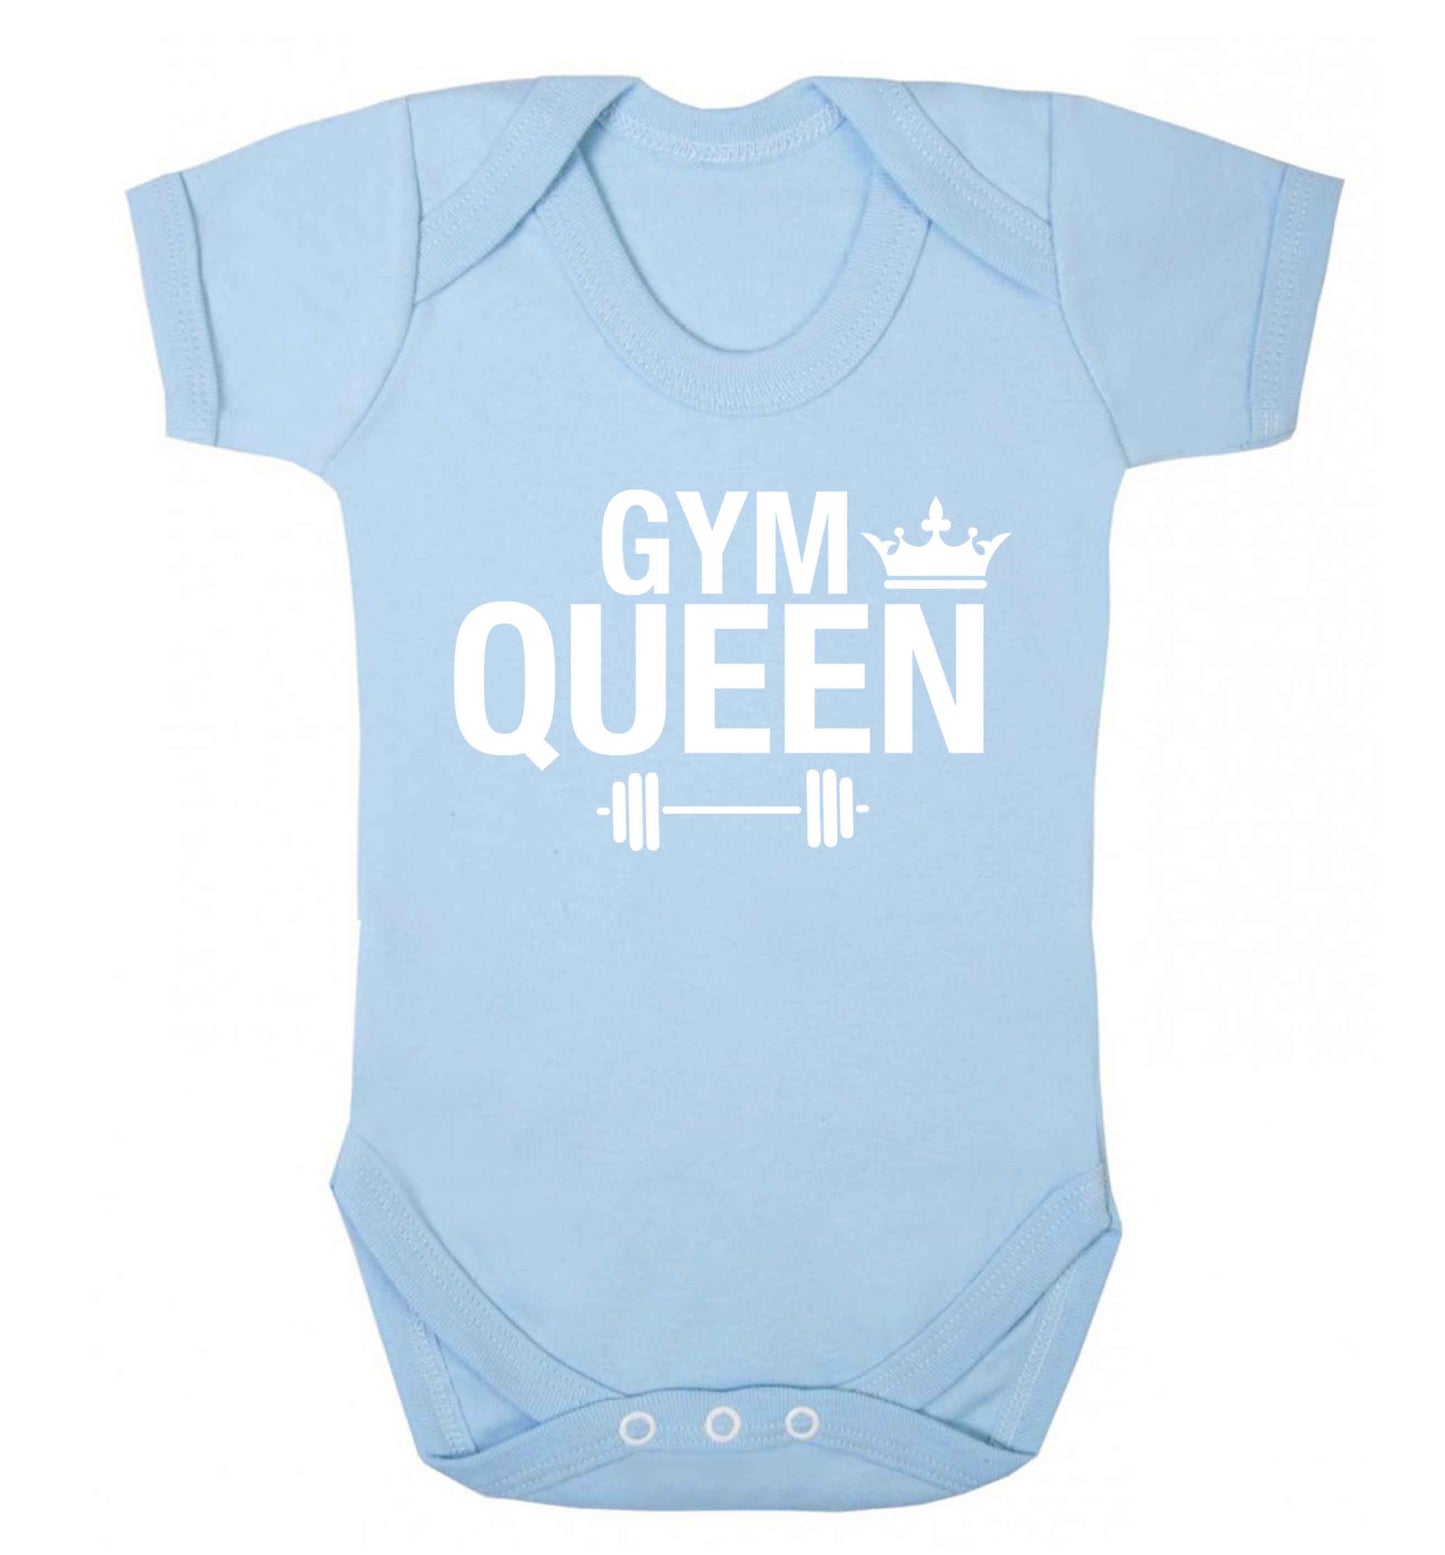 Gym queen Baby Vest pale blue 18-24 months